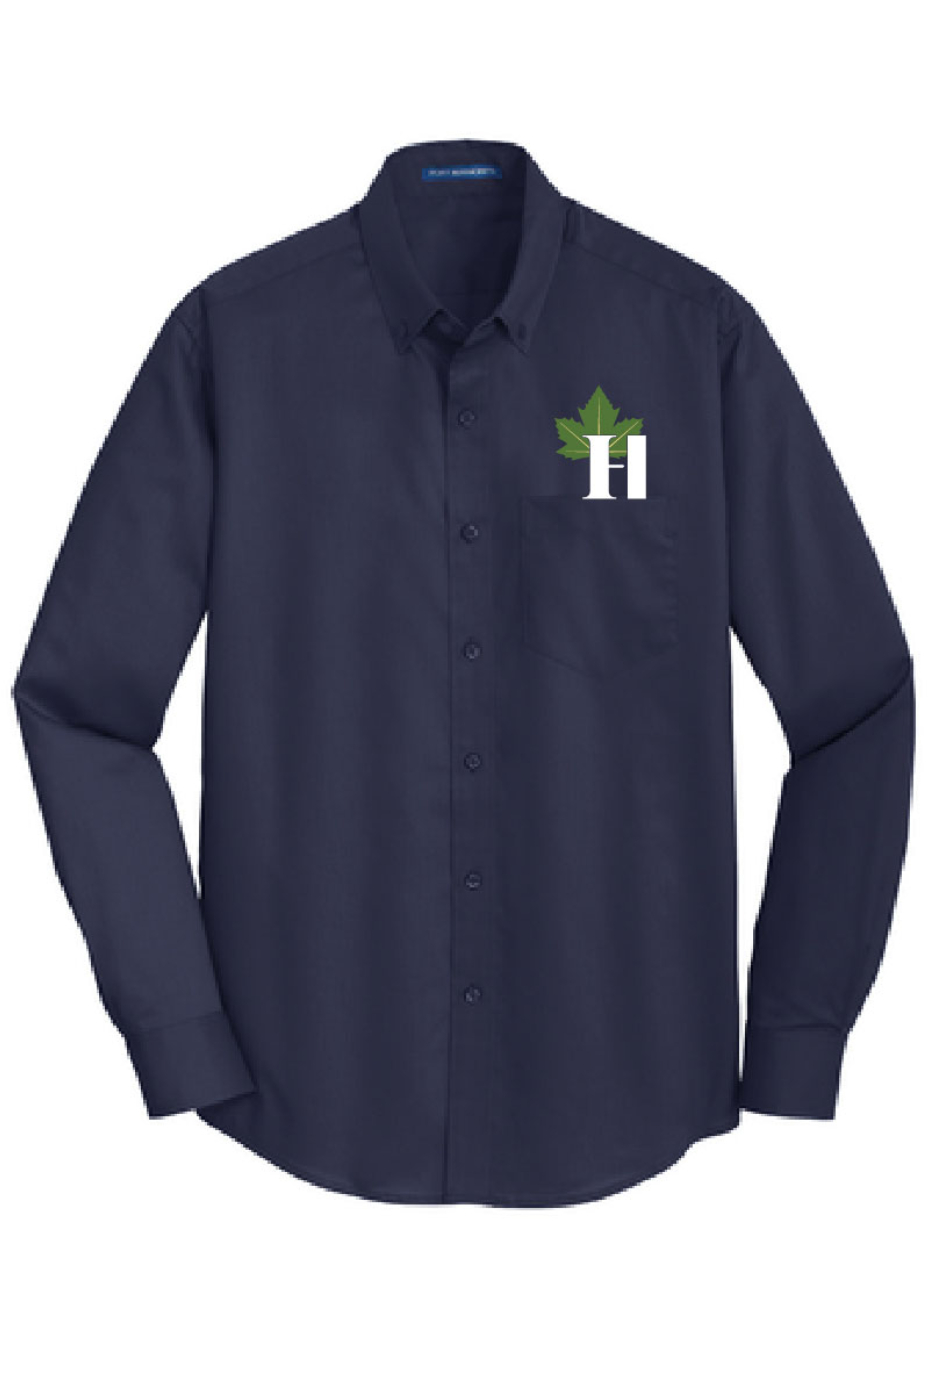 Hillenmeyer Port Authority SuperPro Twill Shirt - S663